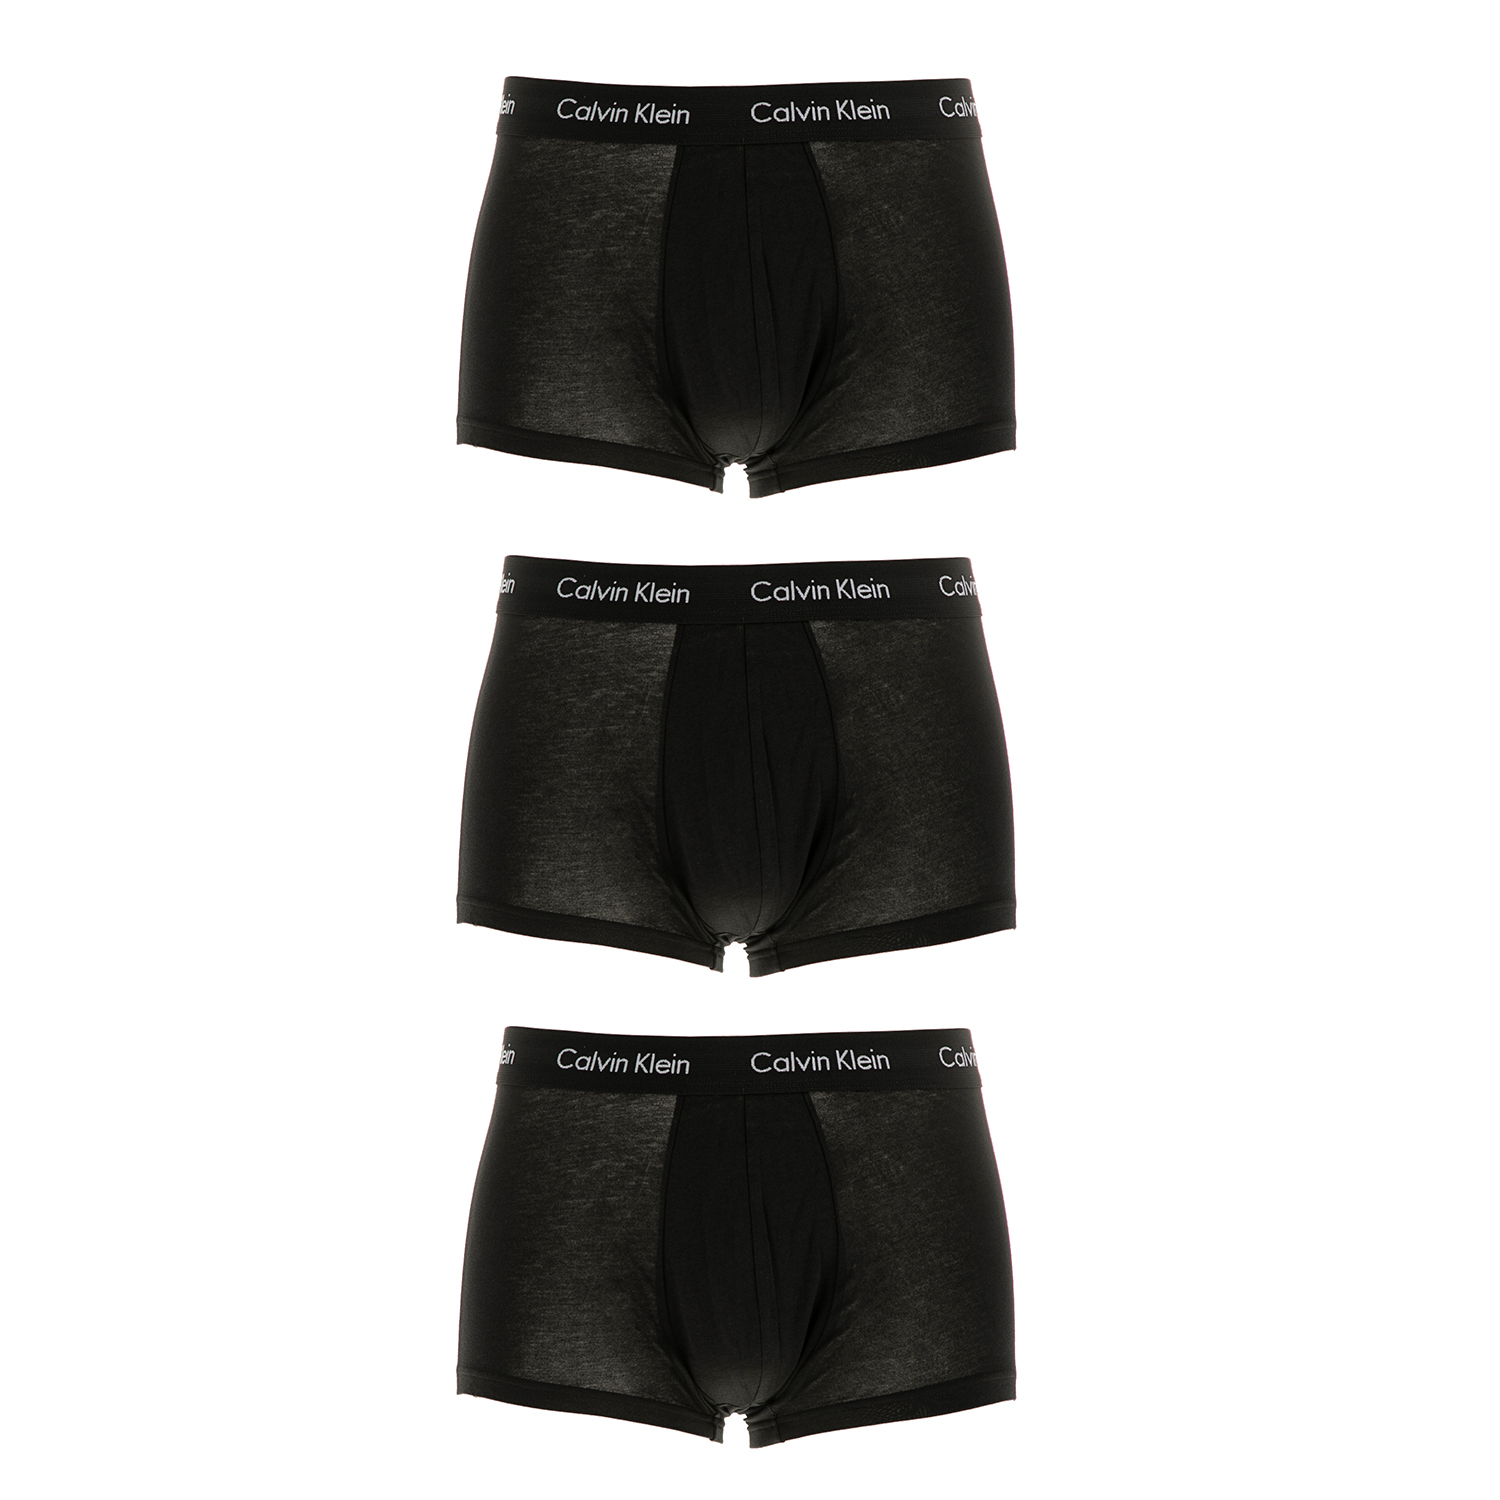 CK UNDERWEAR - Ανδρικό σετ μπόξερ Calvin Klein μαύρα Ανδρικά/Ρούχα/Εσώρουχα/Μπόξερ